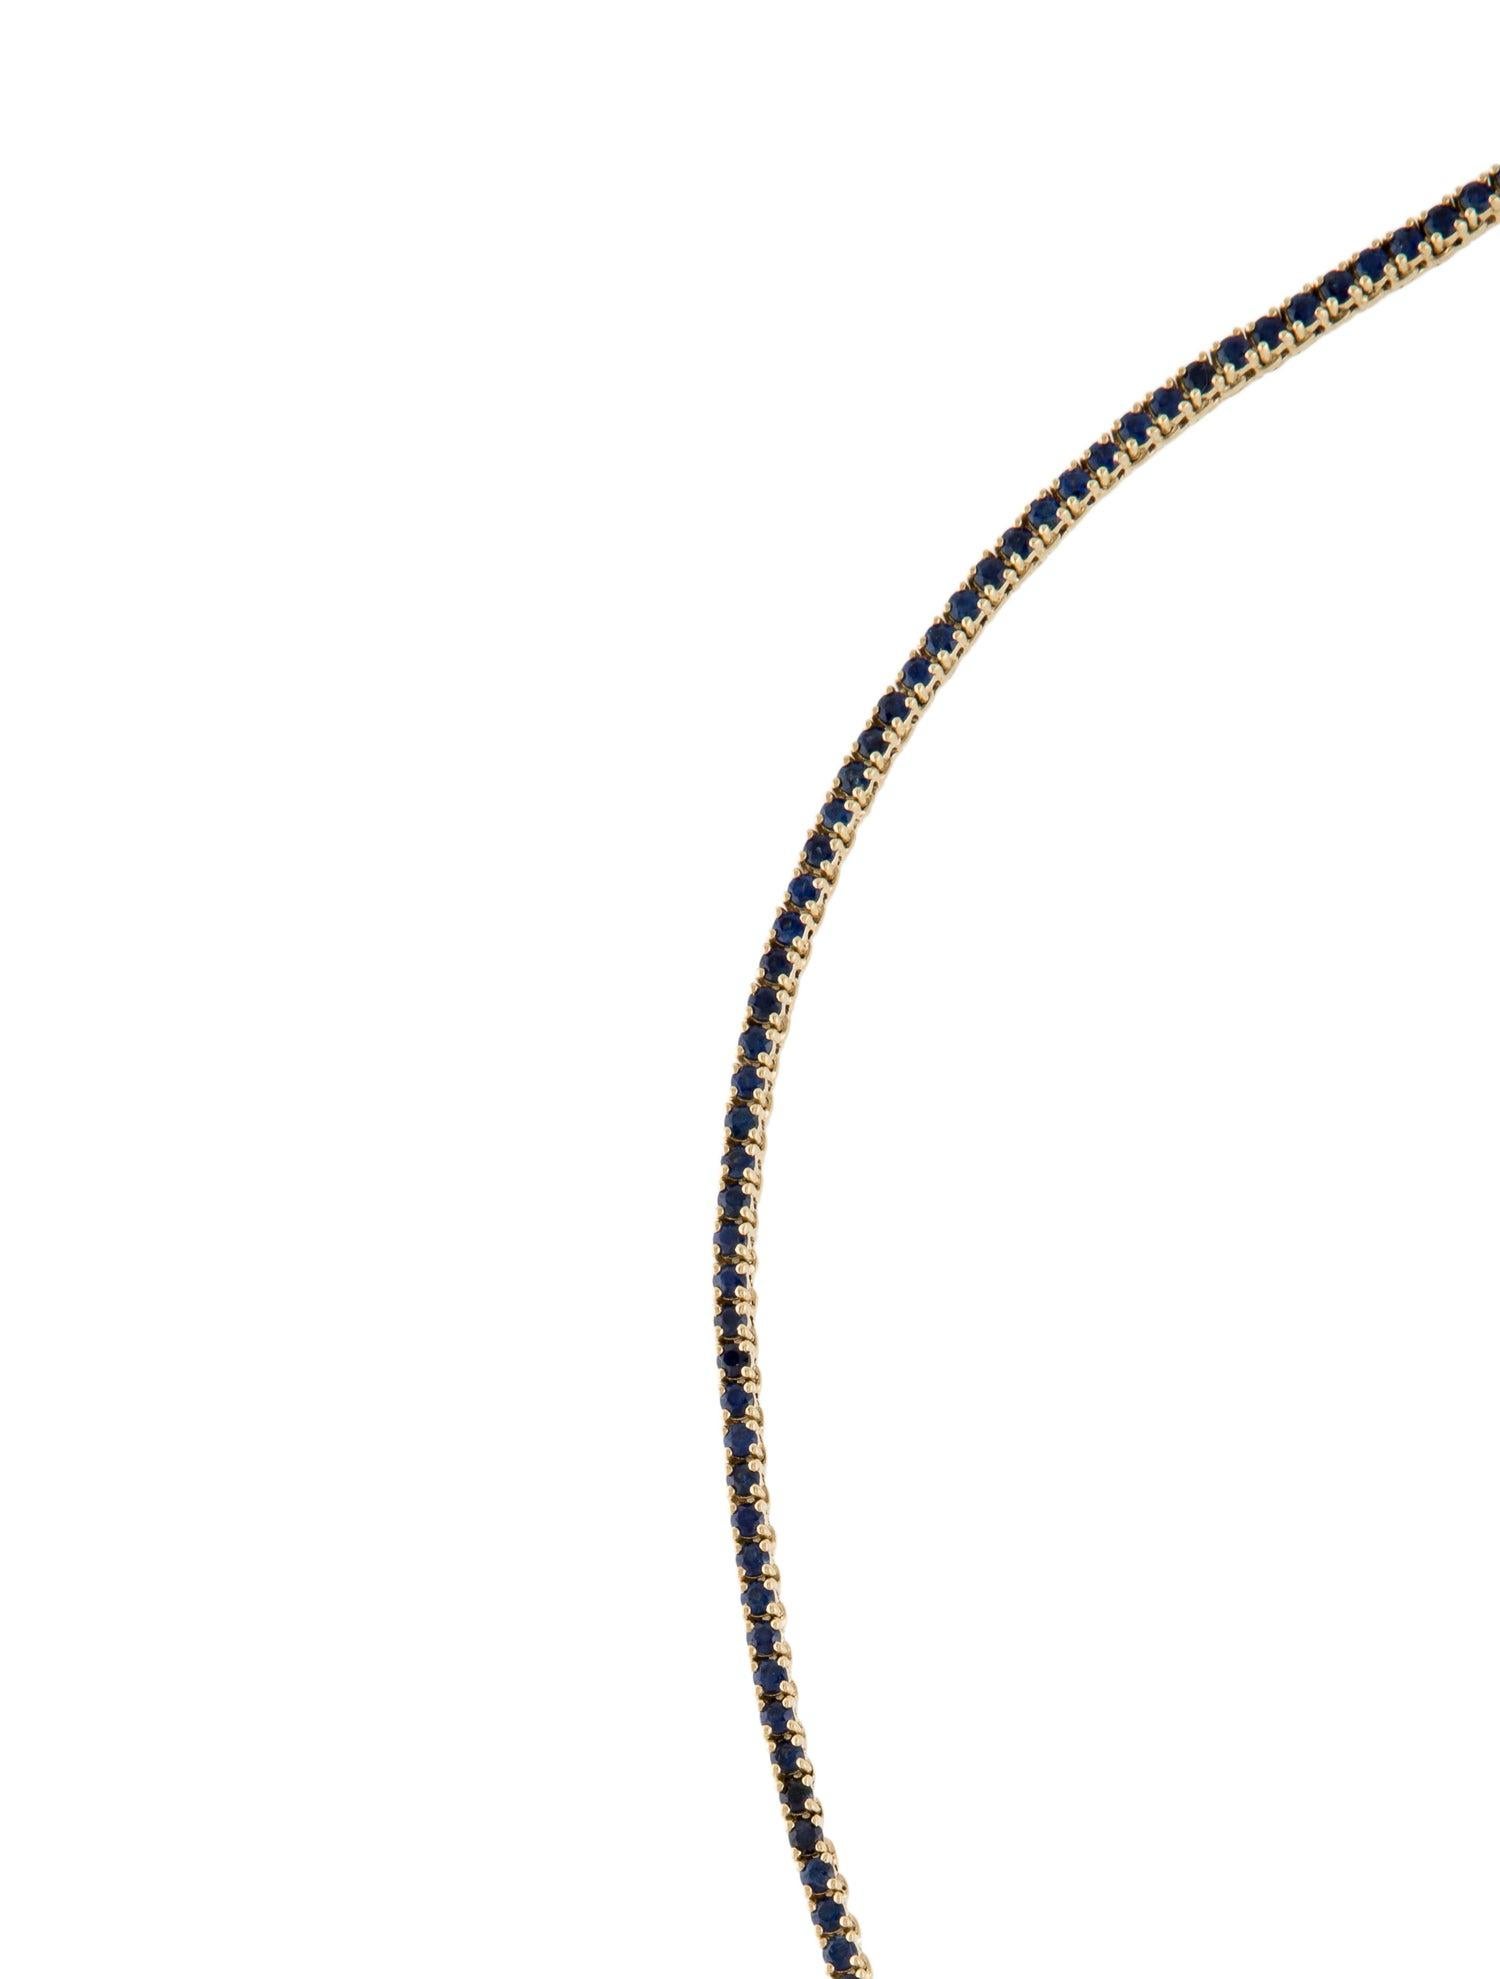 Brilliant Cut 14K 6.47ctw Sapphire Collar Necklace - Exquisite Gemstone Statement Piece For Sale